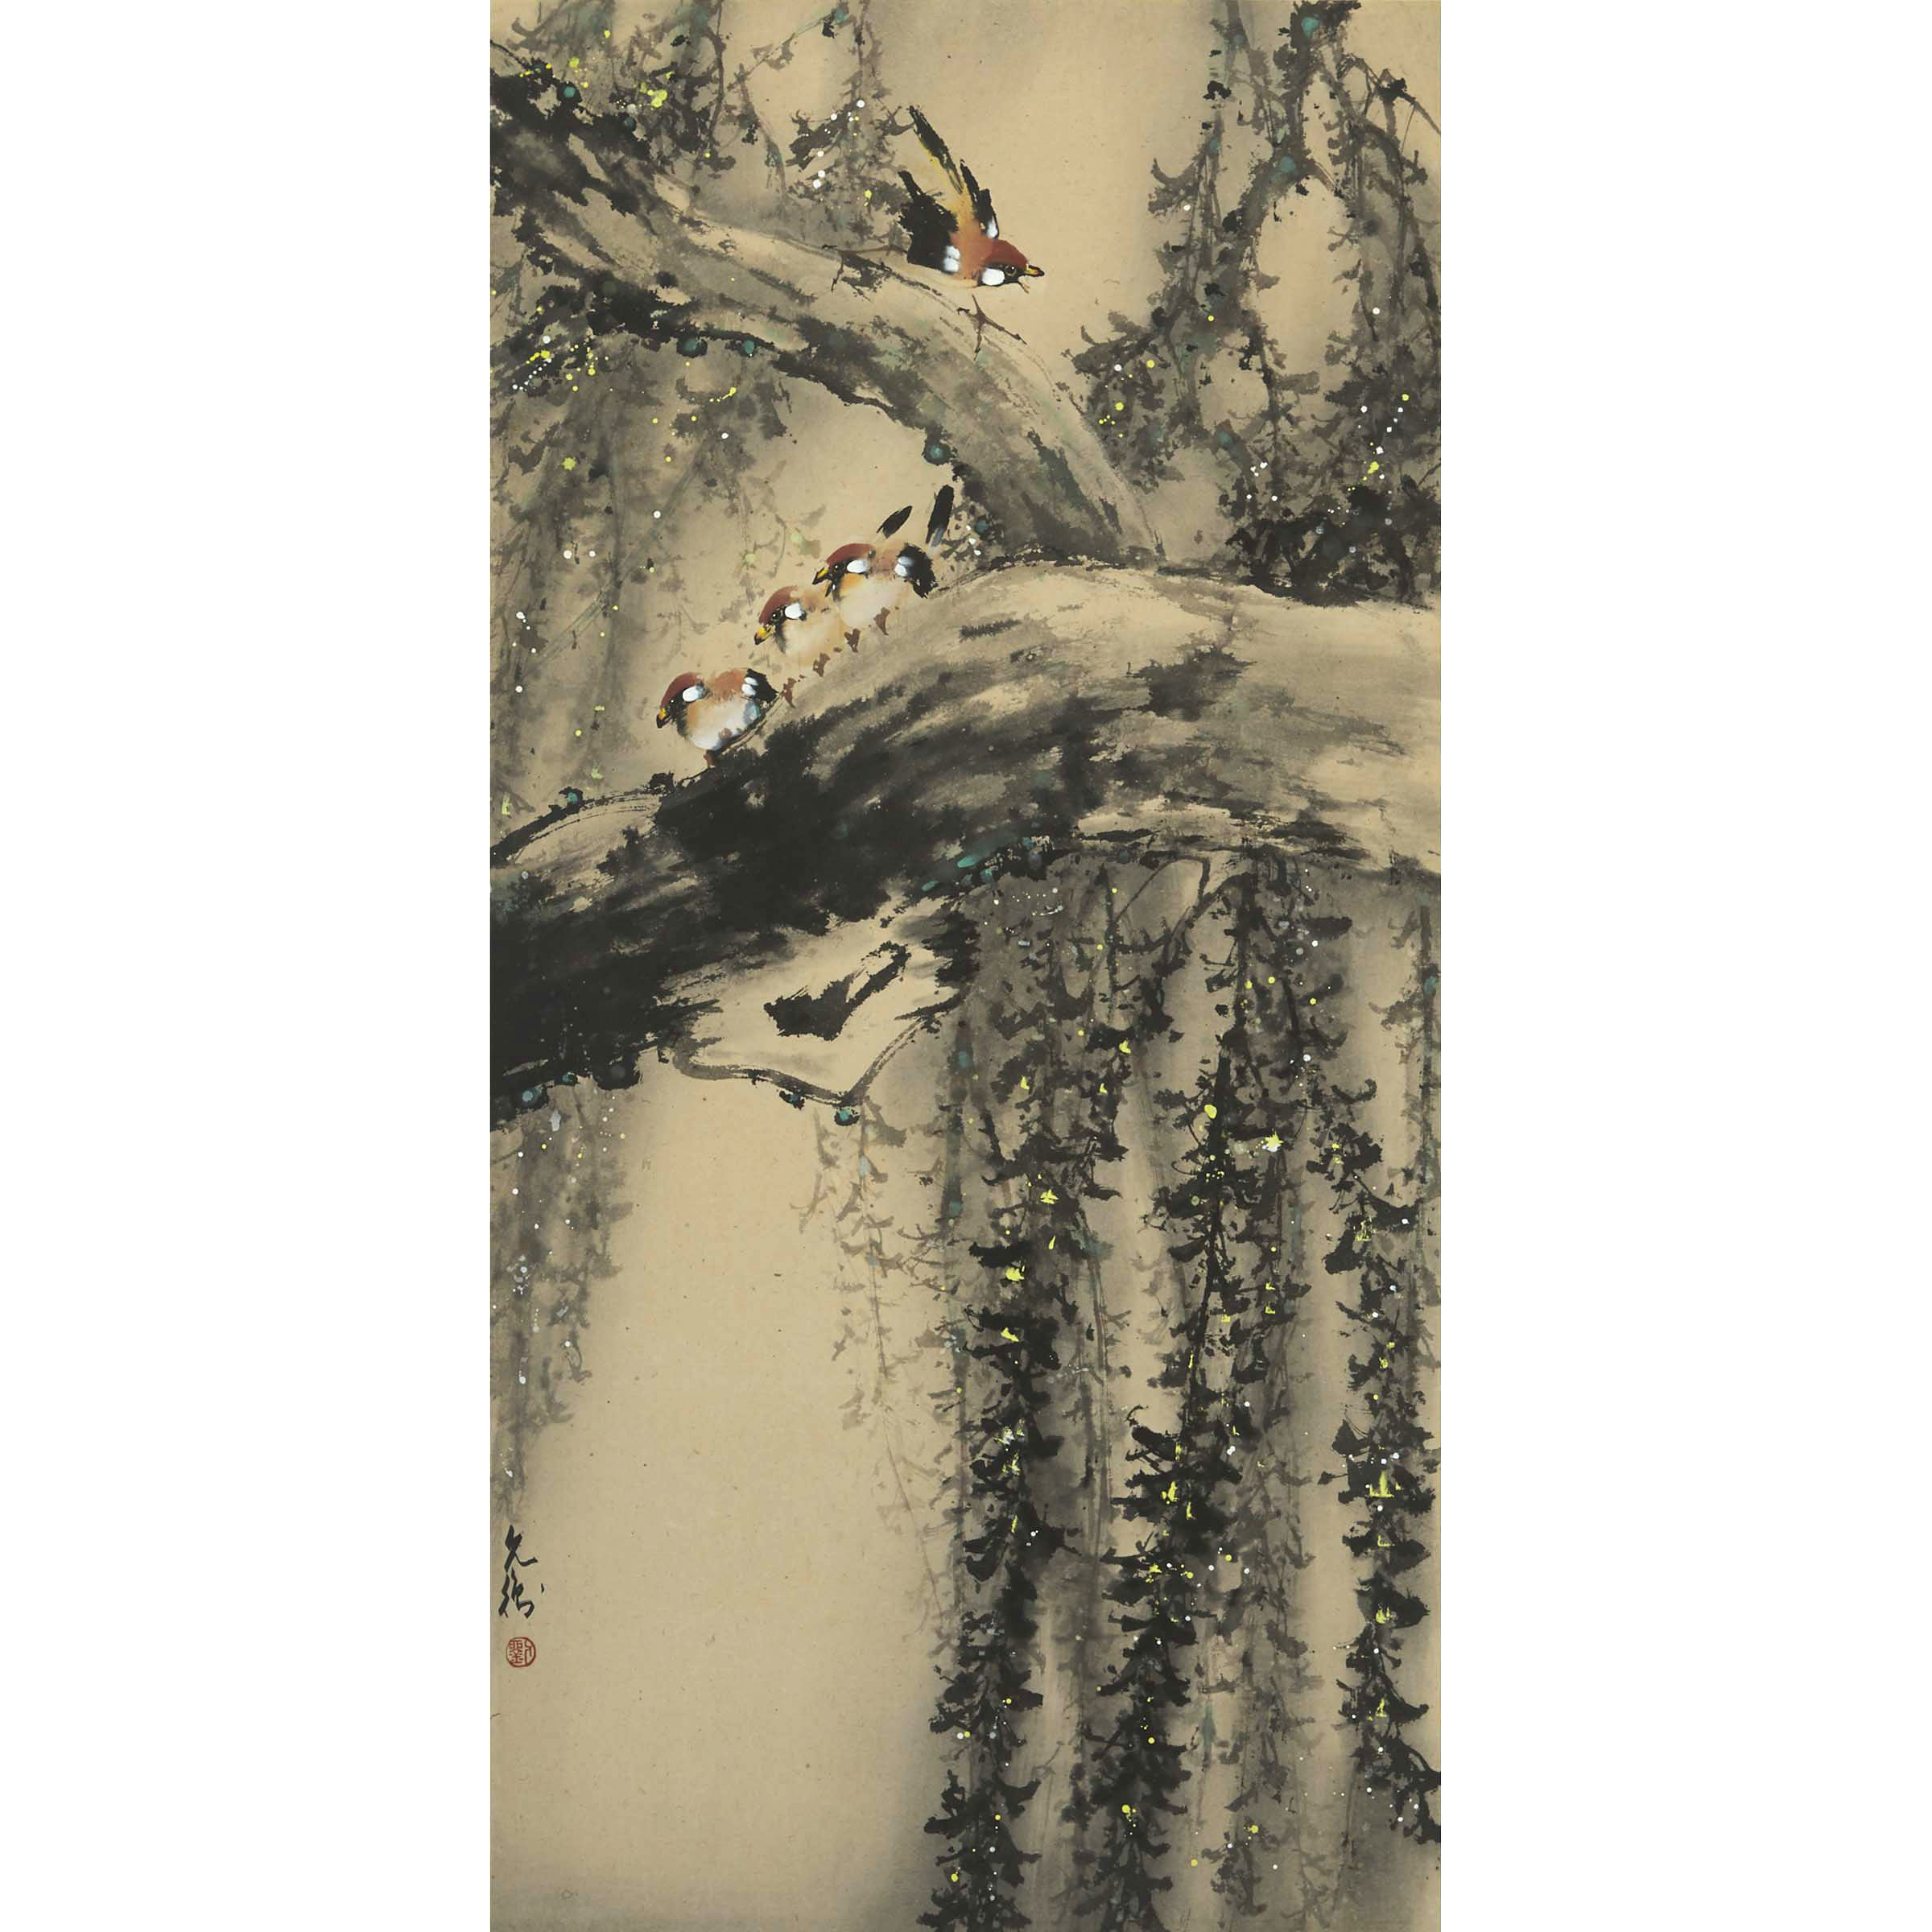 Liu Yunheng (1938-1975), Lingnan School, Singing Birds on Trees